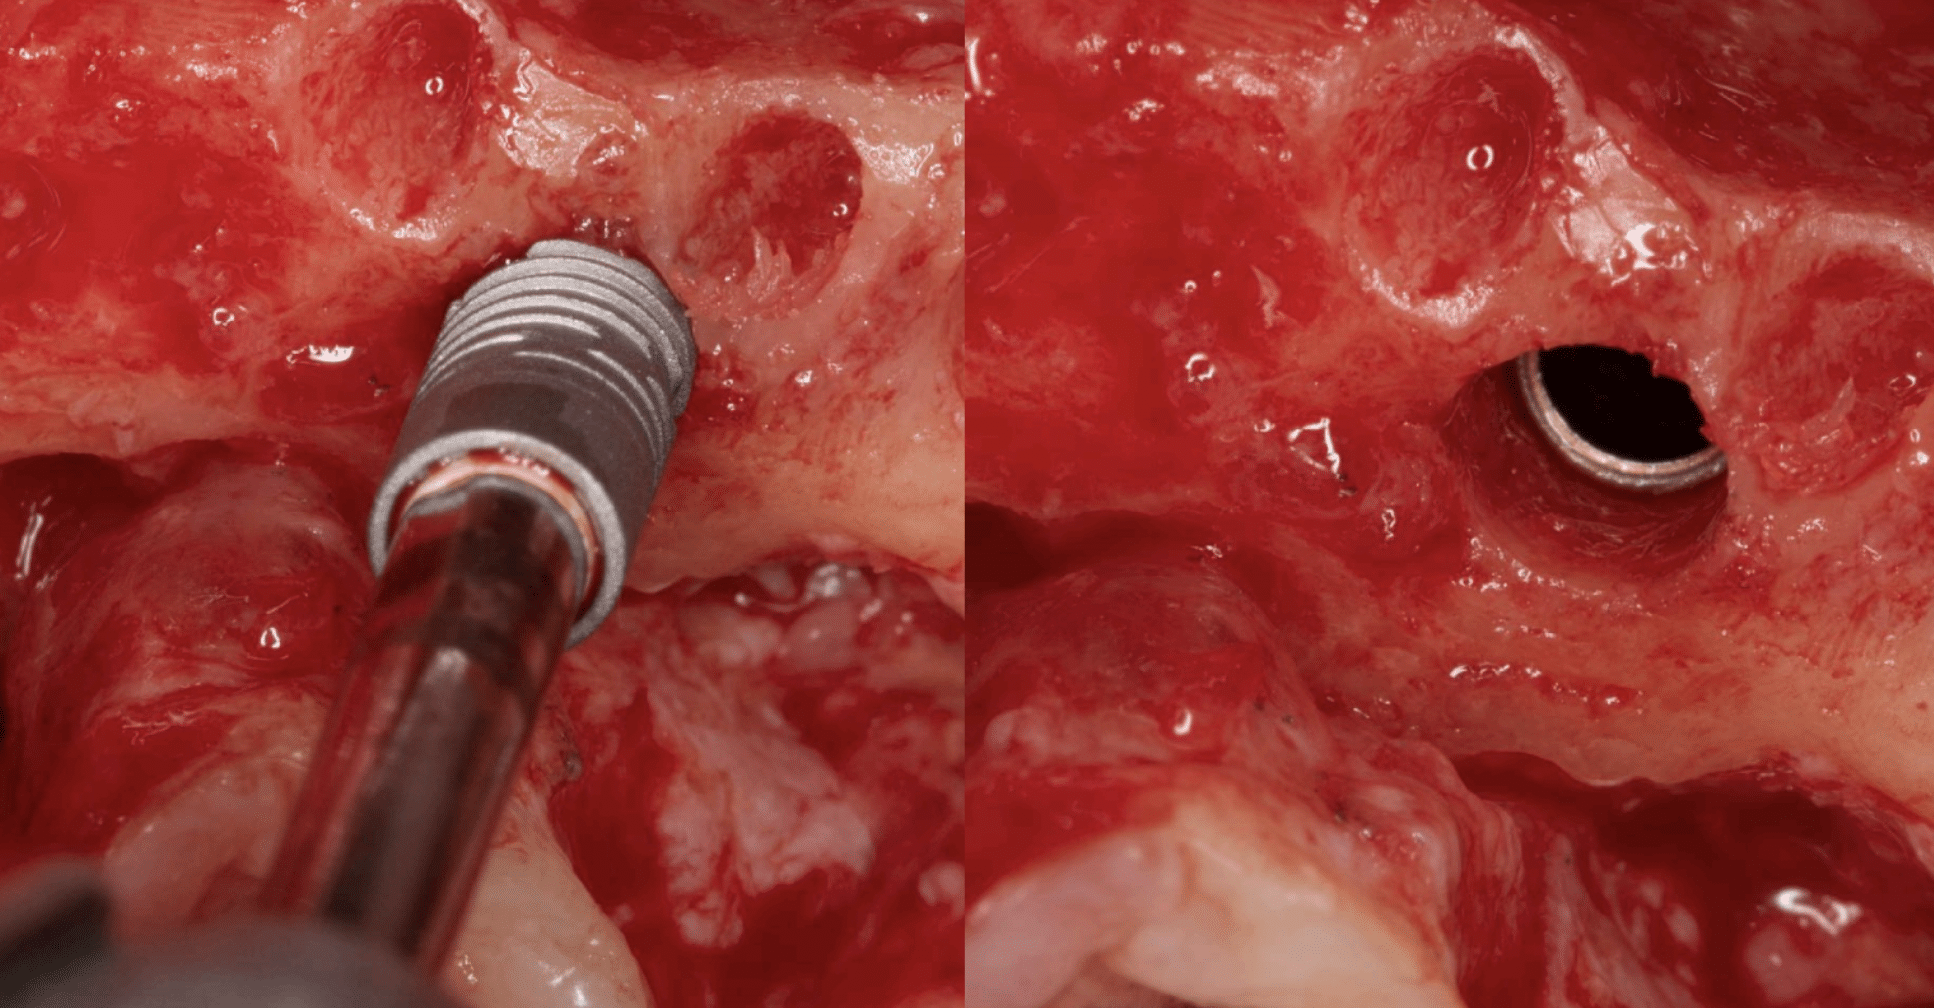 colocacion subcrestal implante